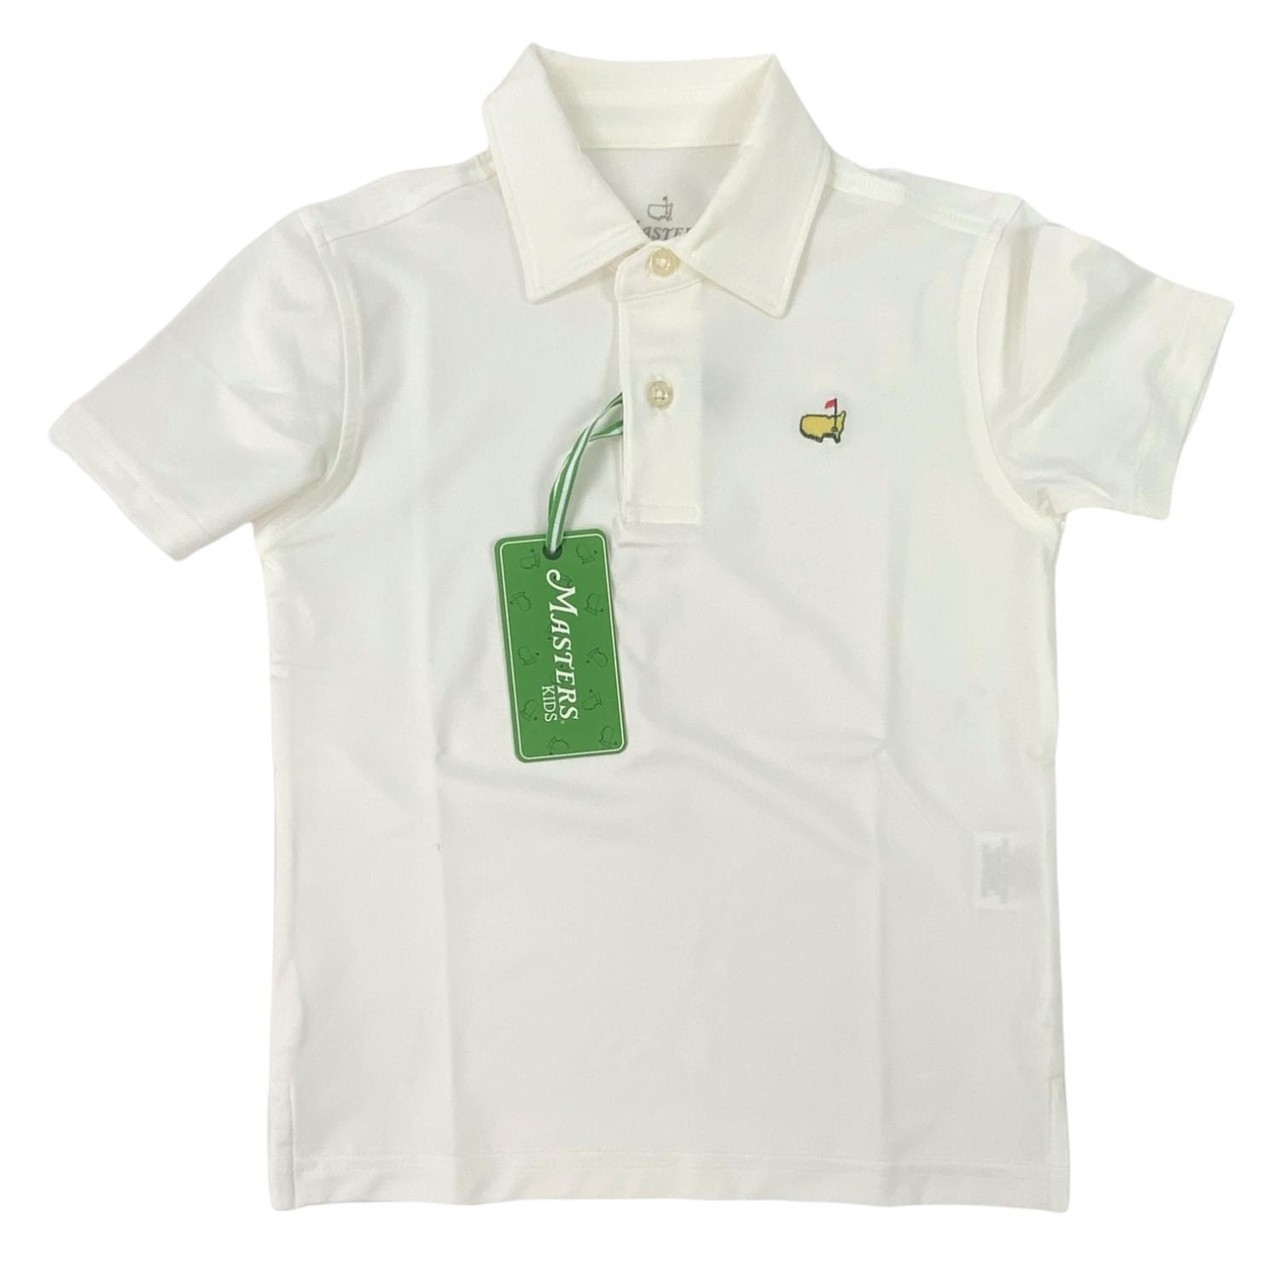 Masters Toddler's Golf Shirt - White